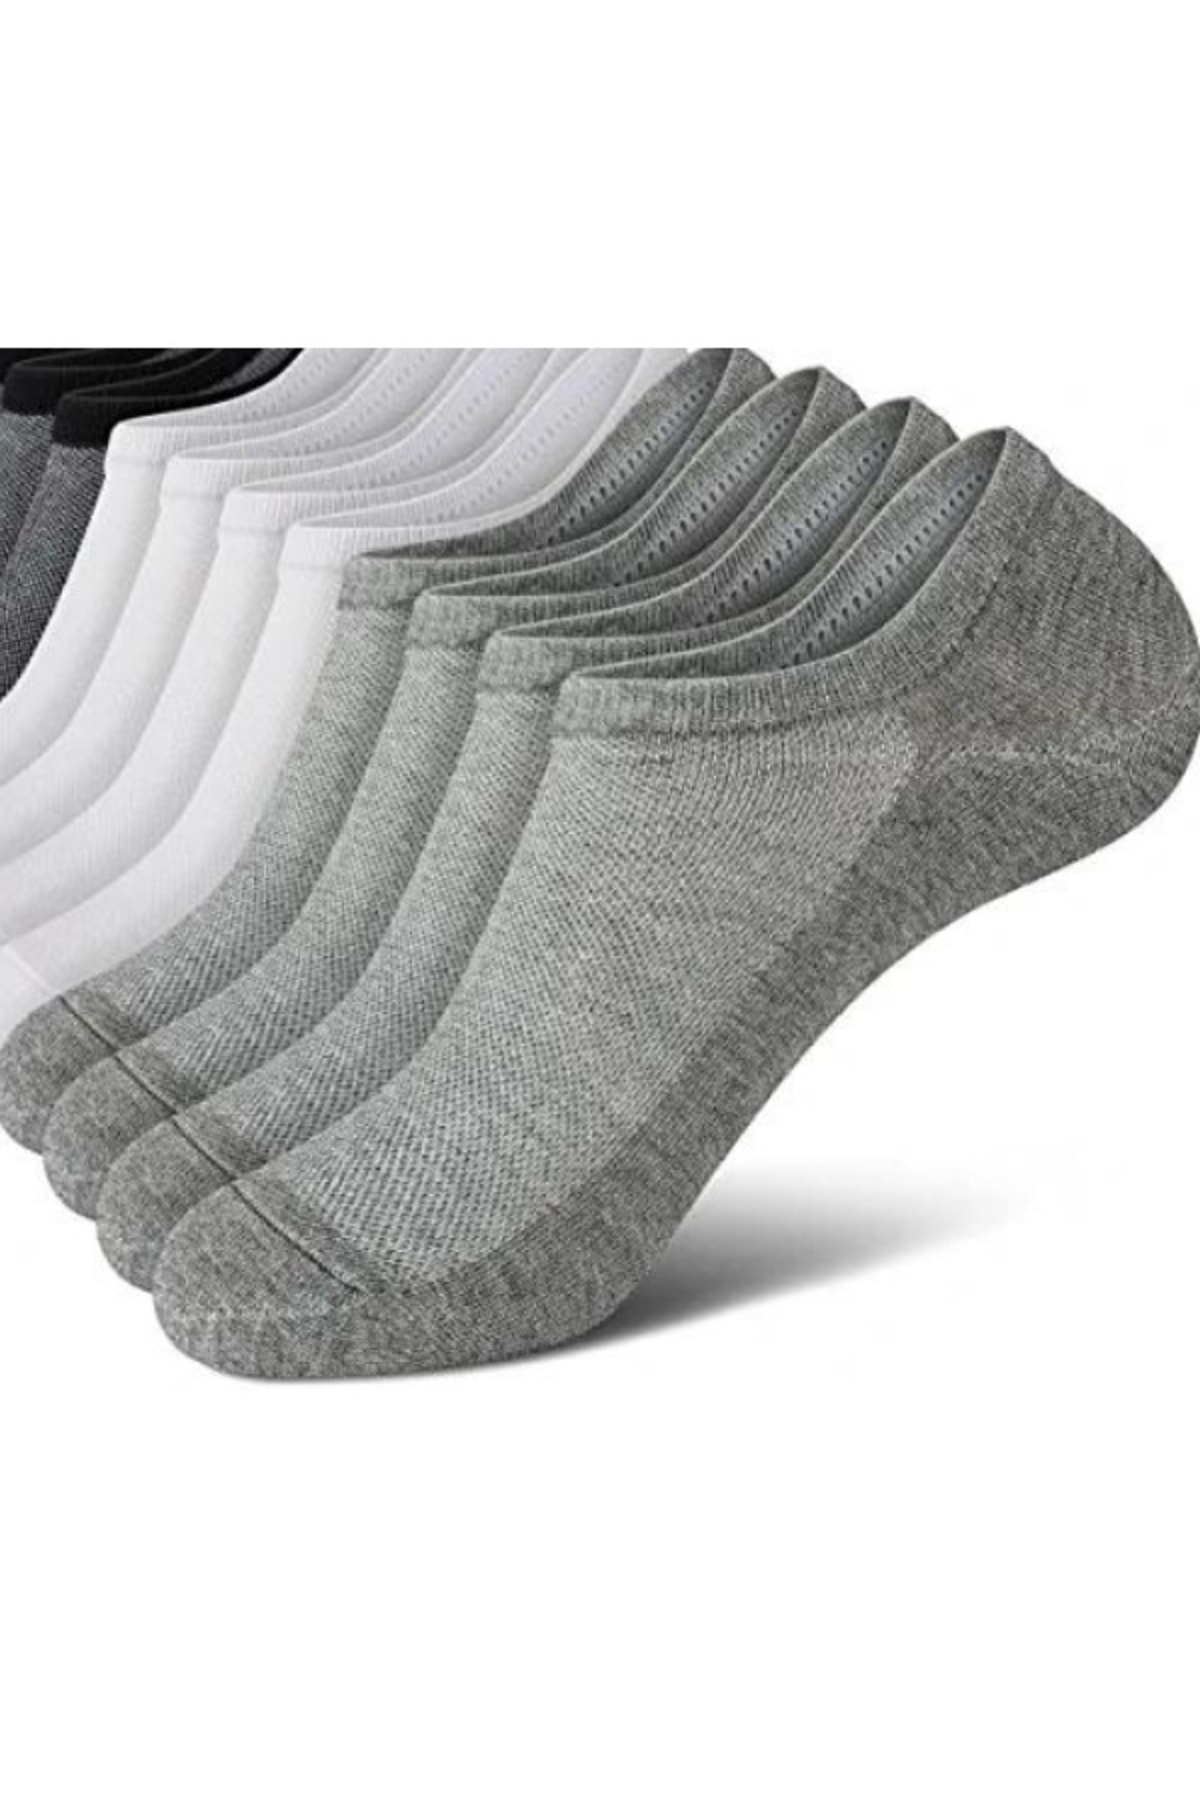 Janissary 12 Adet Adet Erkek Premium Patik Çorap, Senaker Çorap, 3 Renk